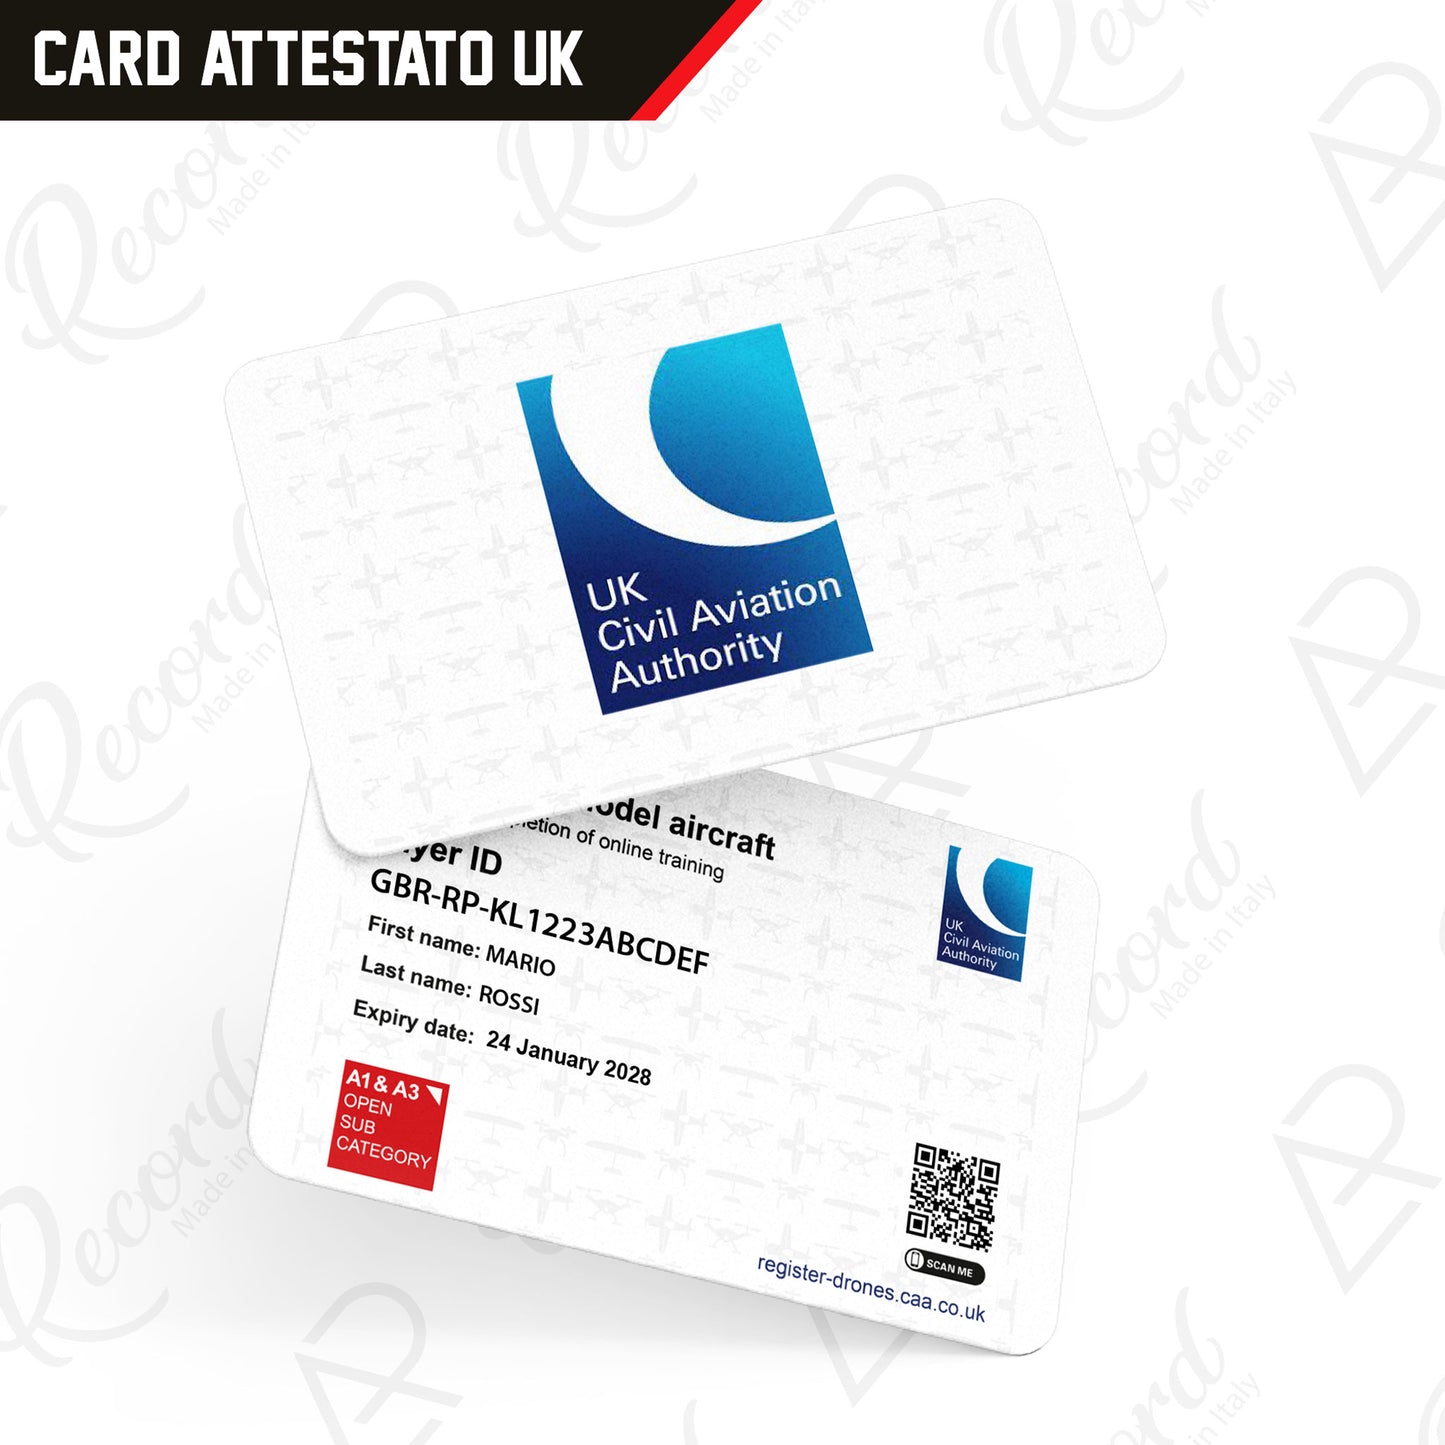 CARD ATTESTATO UAS UK - Andrea Pinotti Official